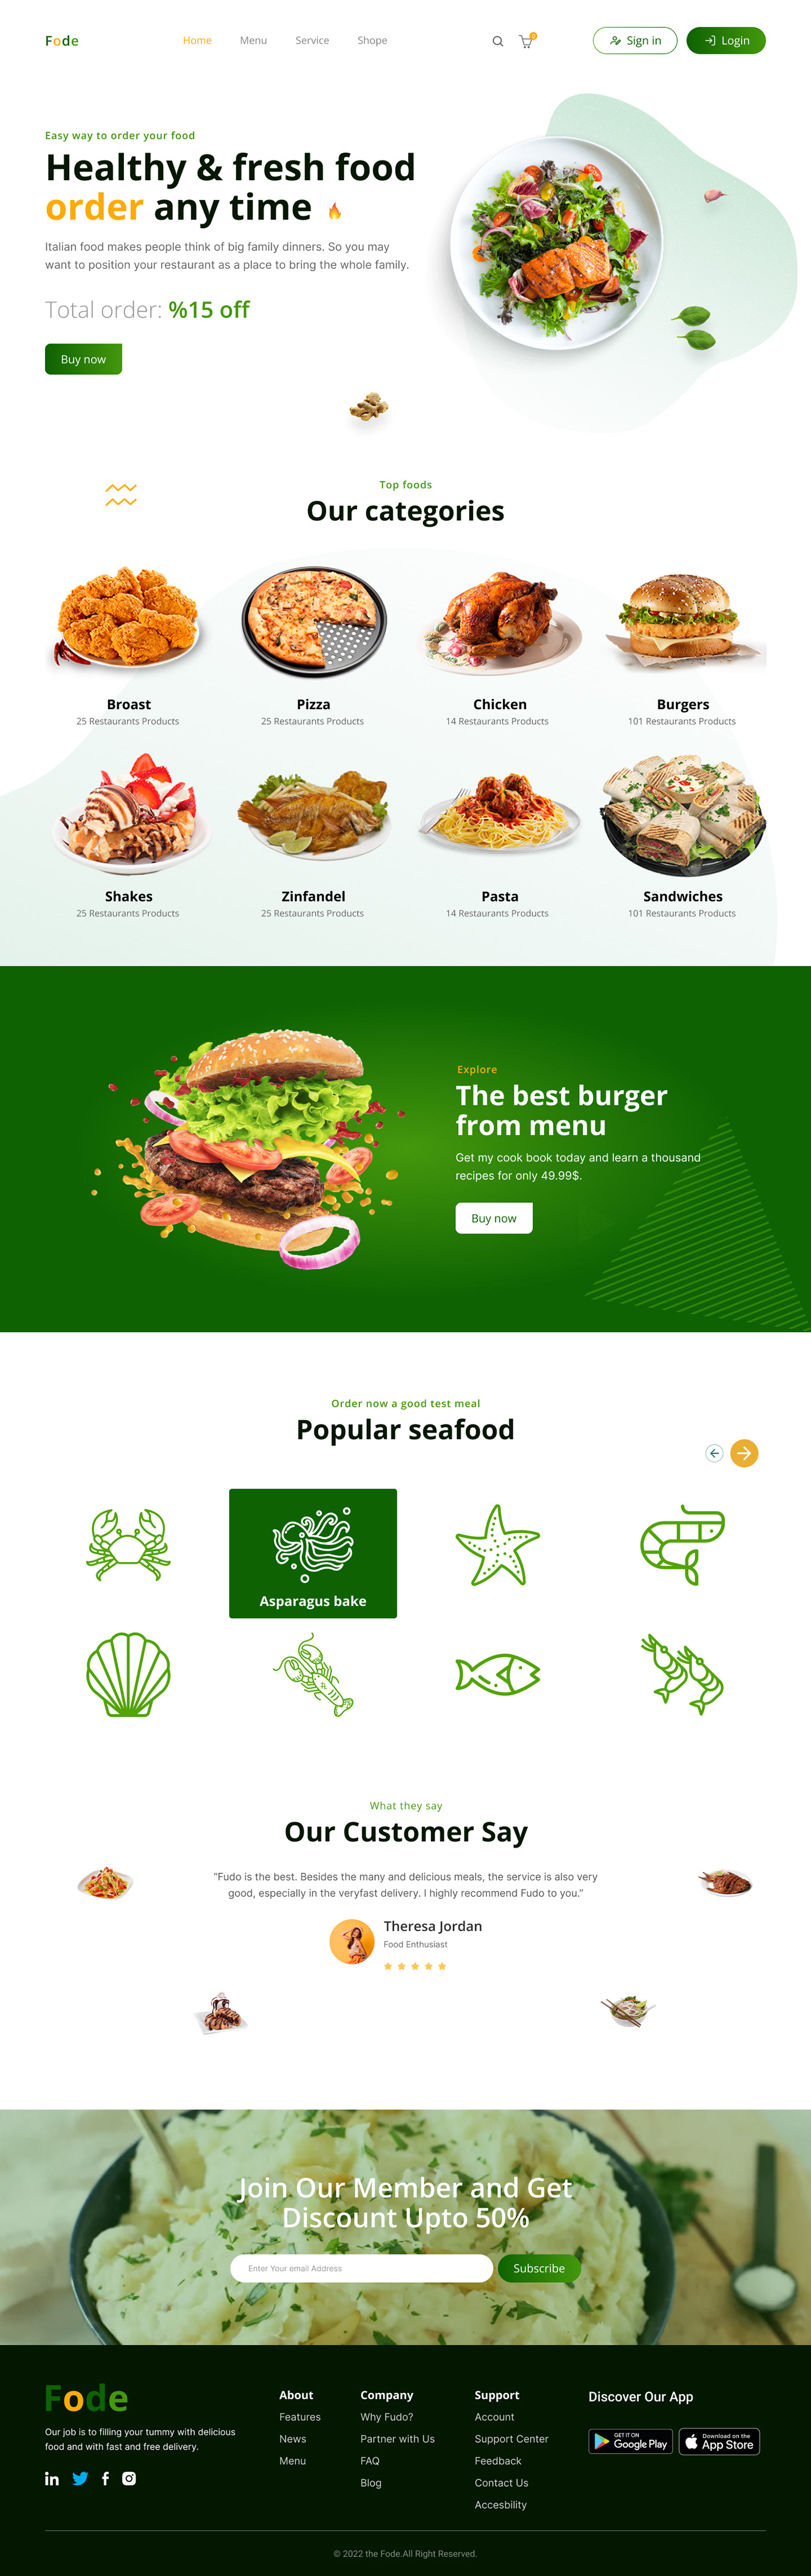 burger chef app delivery delivery app eat food delivery service food order pizza app Restaurant app uiux